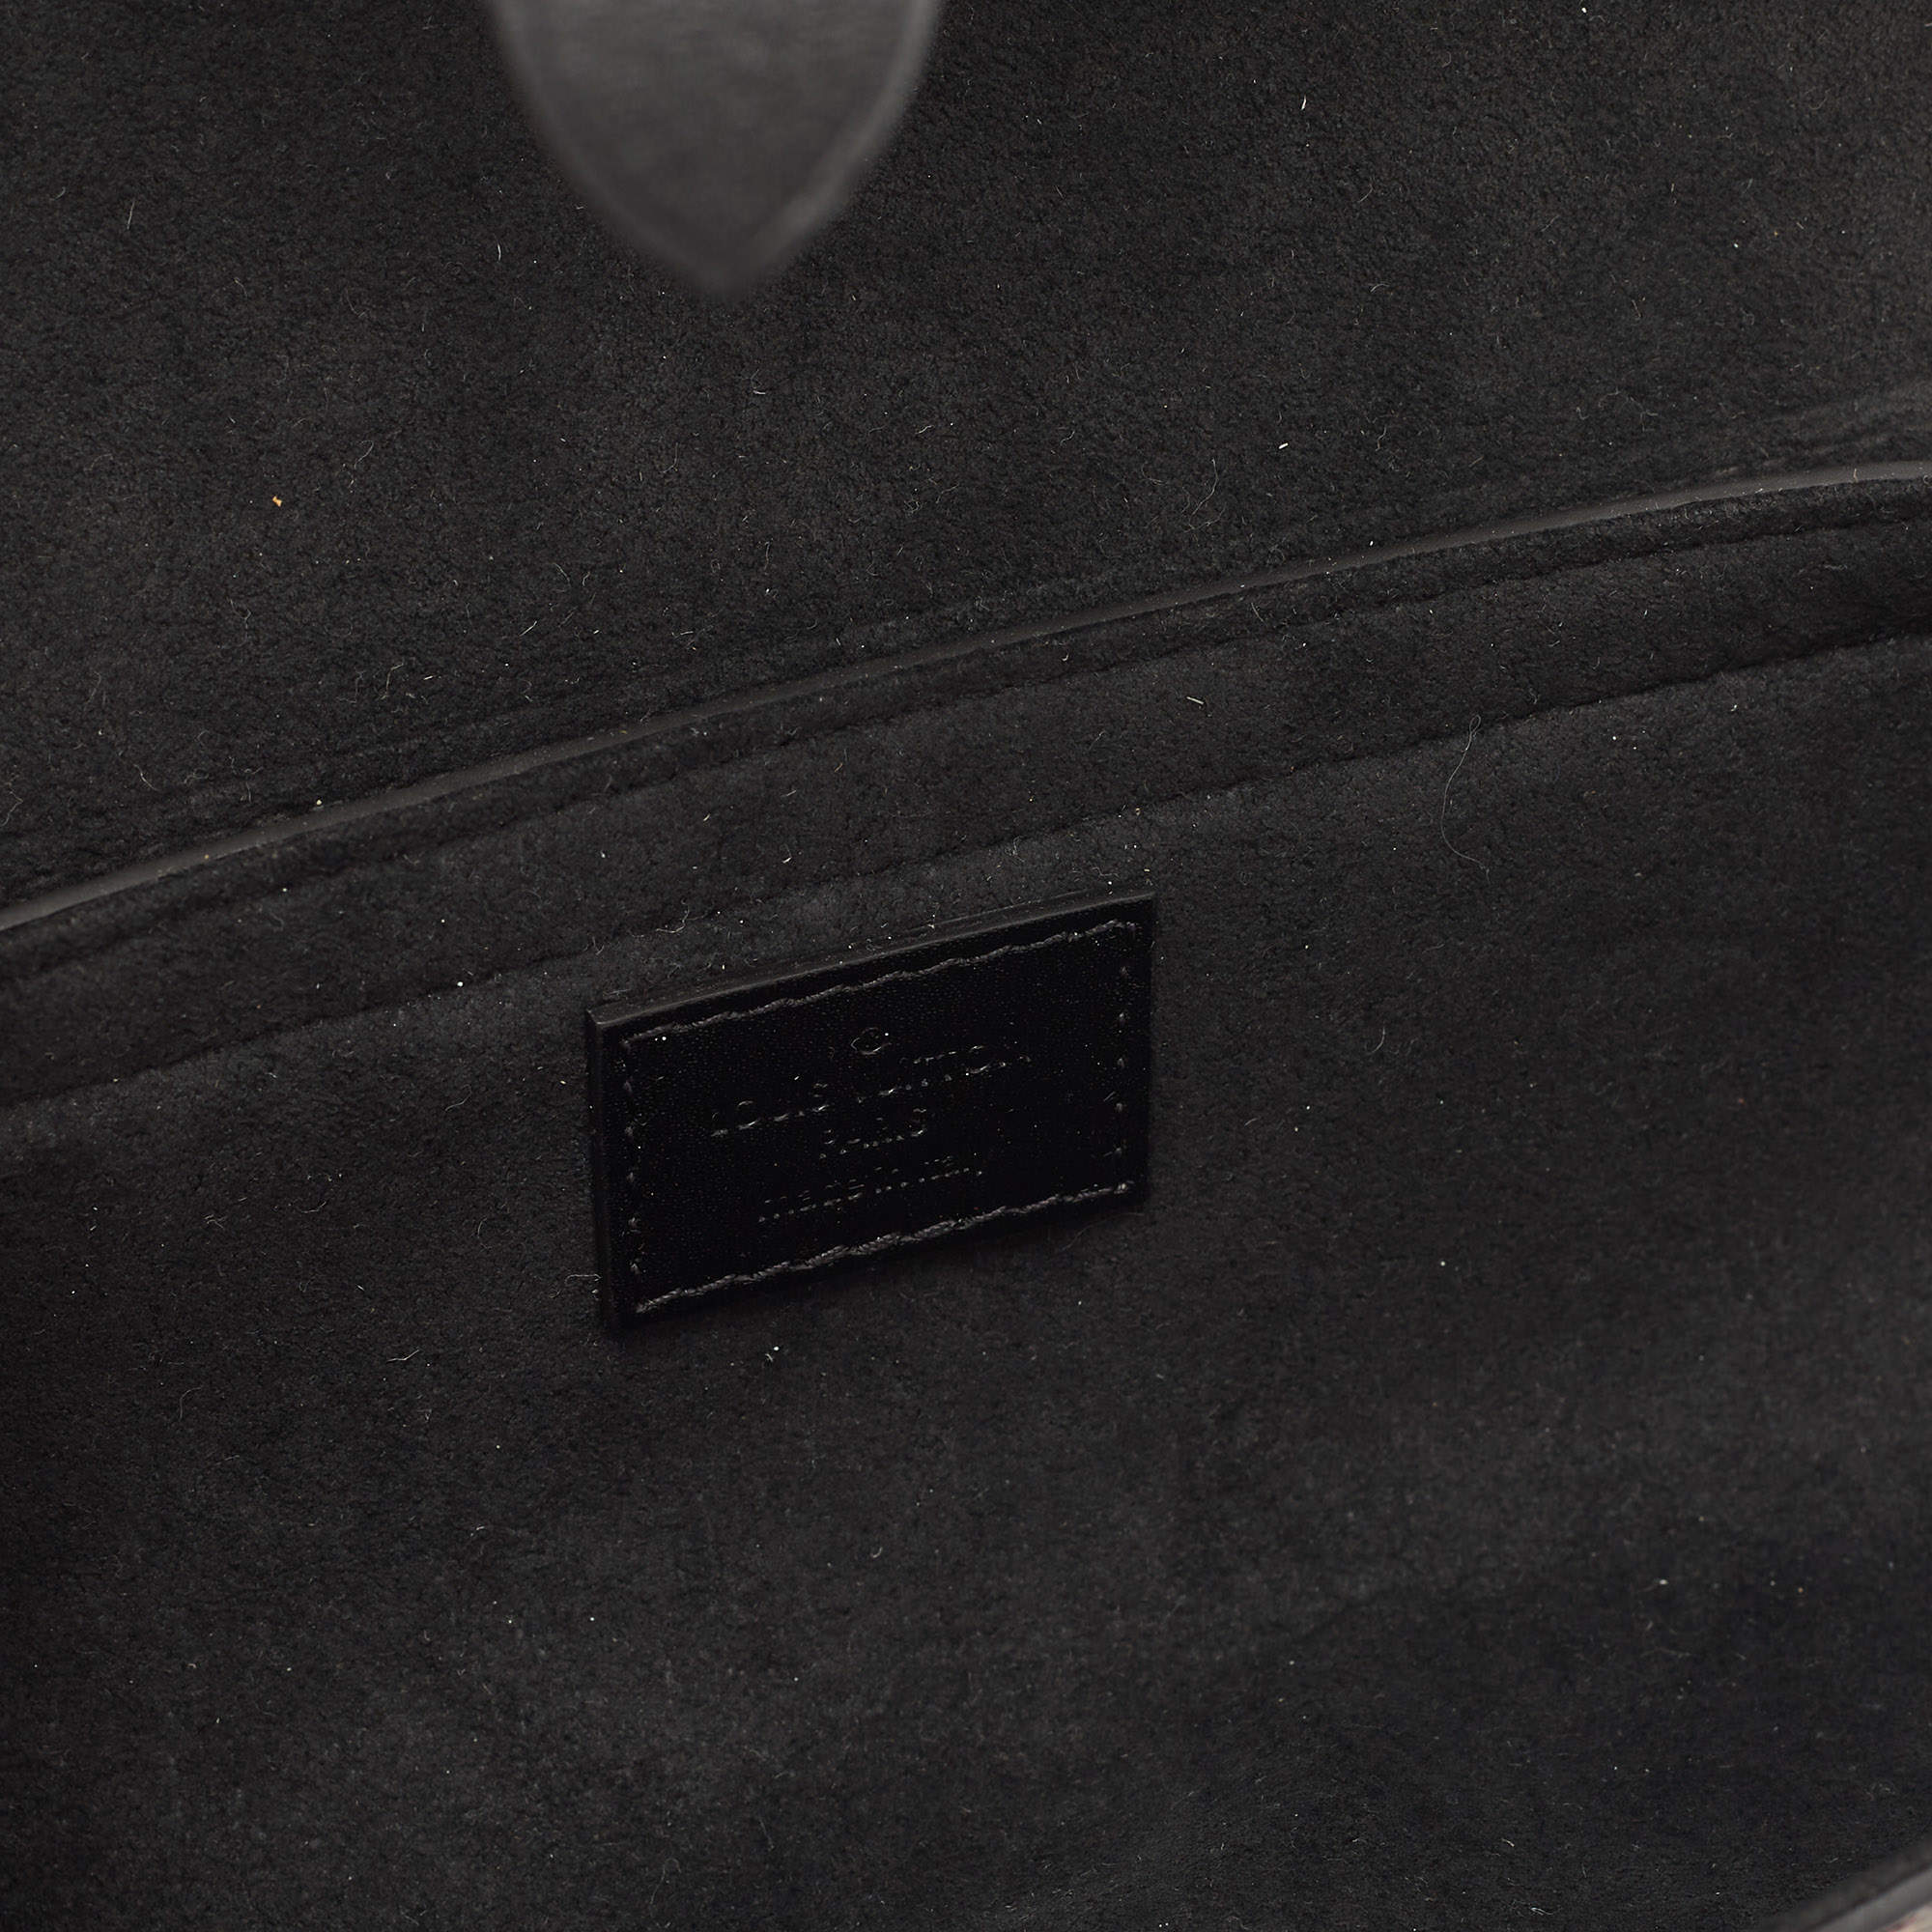 Louis Vuitton Monogram Leather Glasses Case Brown 18x8x1.8cm Free Shipping